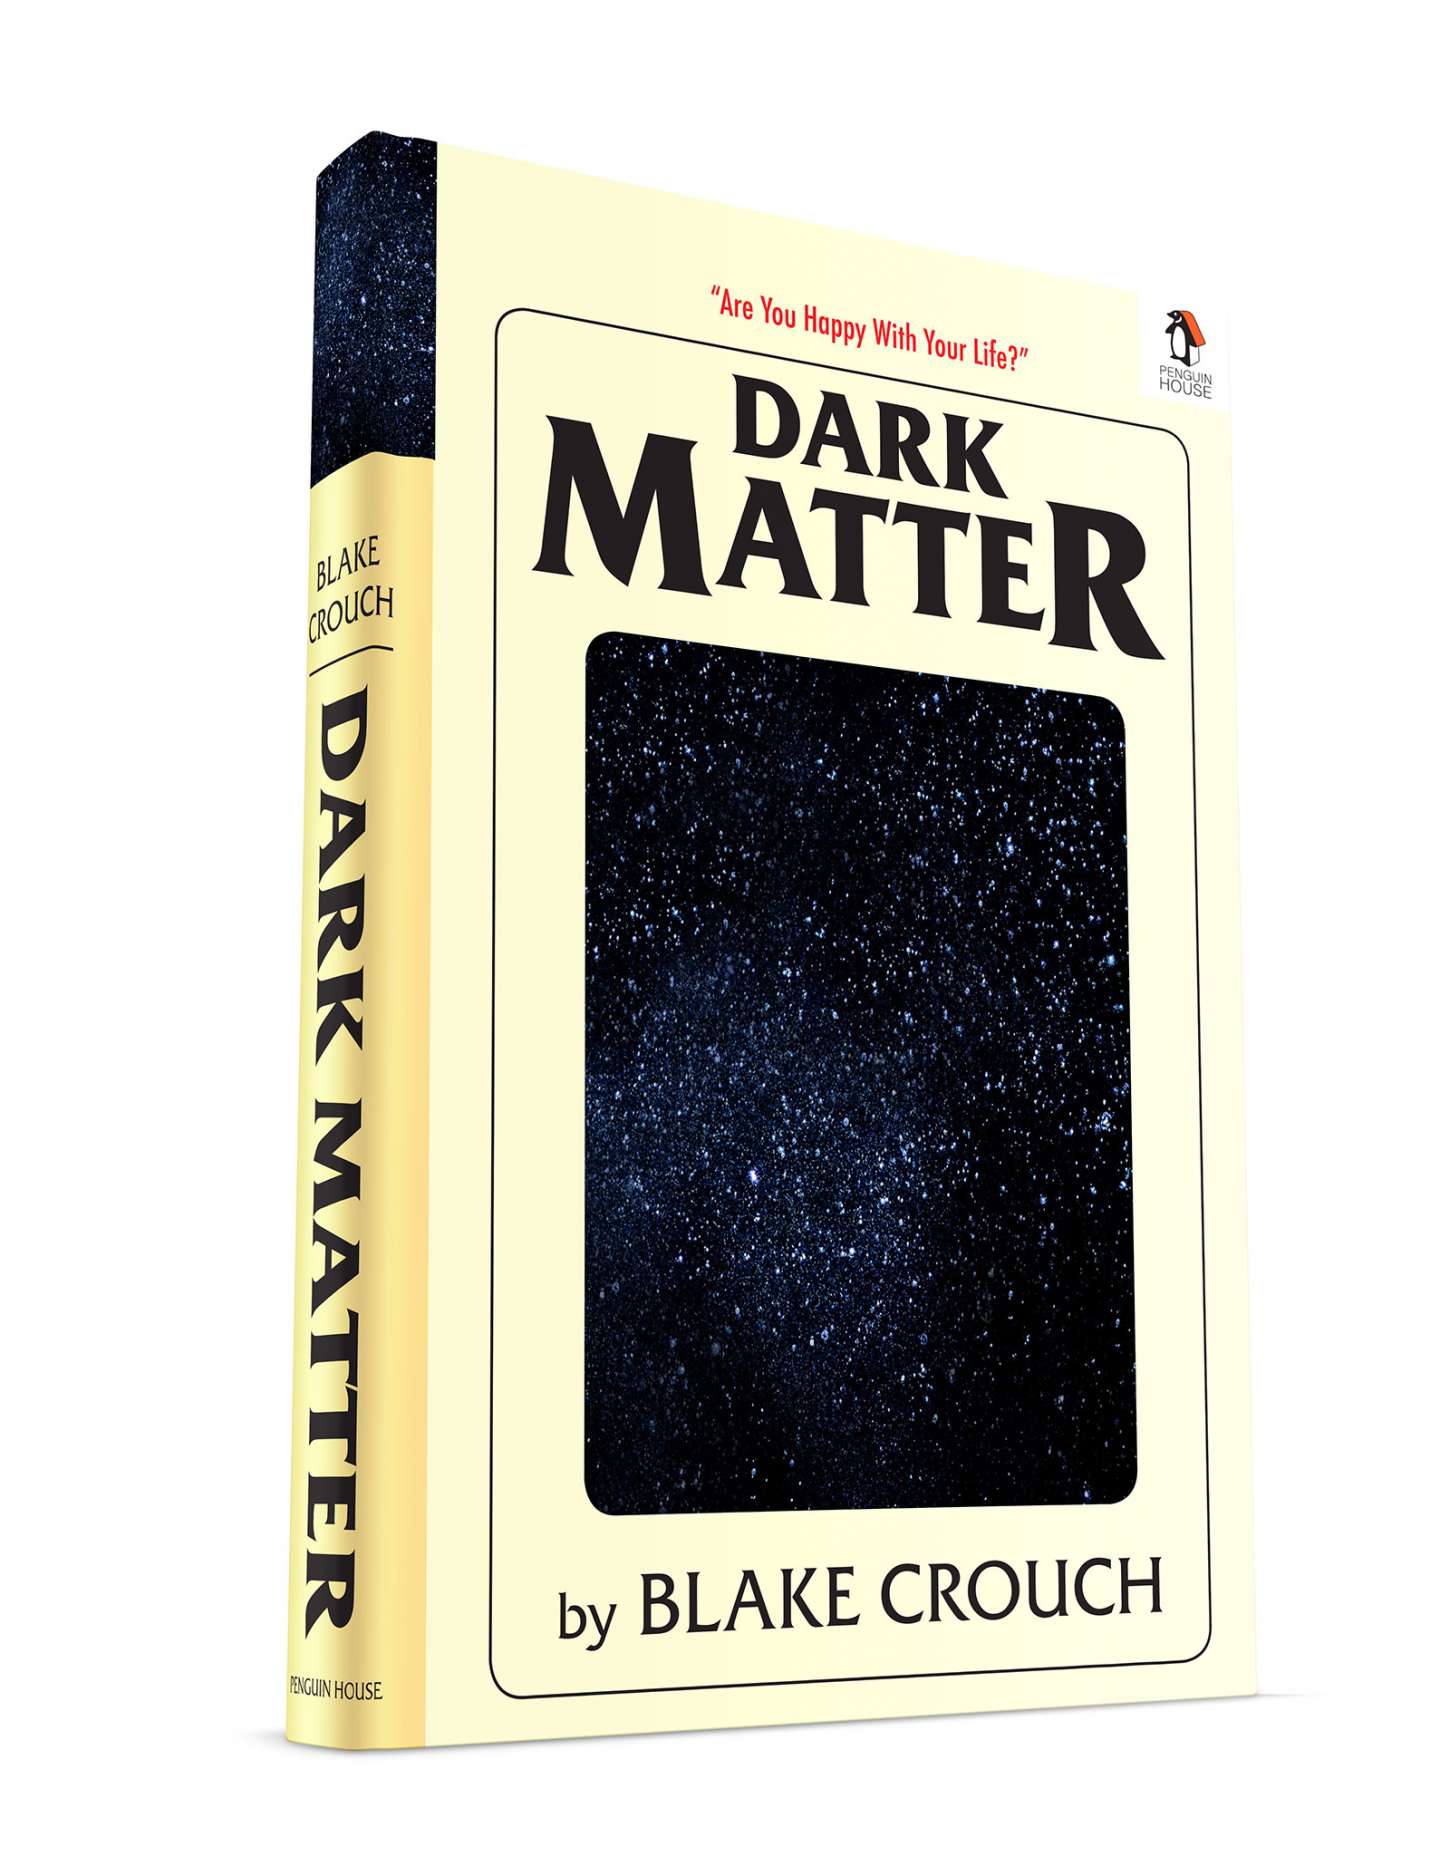 DARK MATTER BOOK COVER